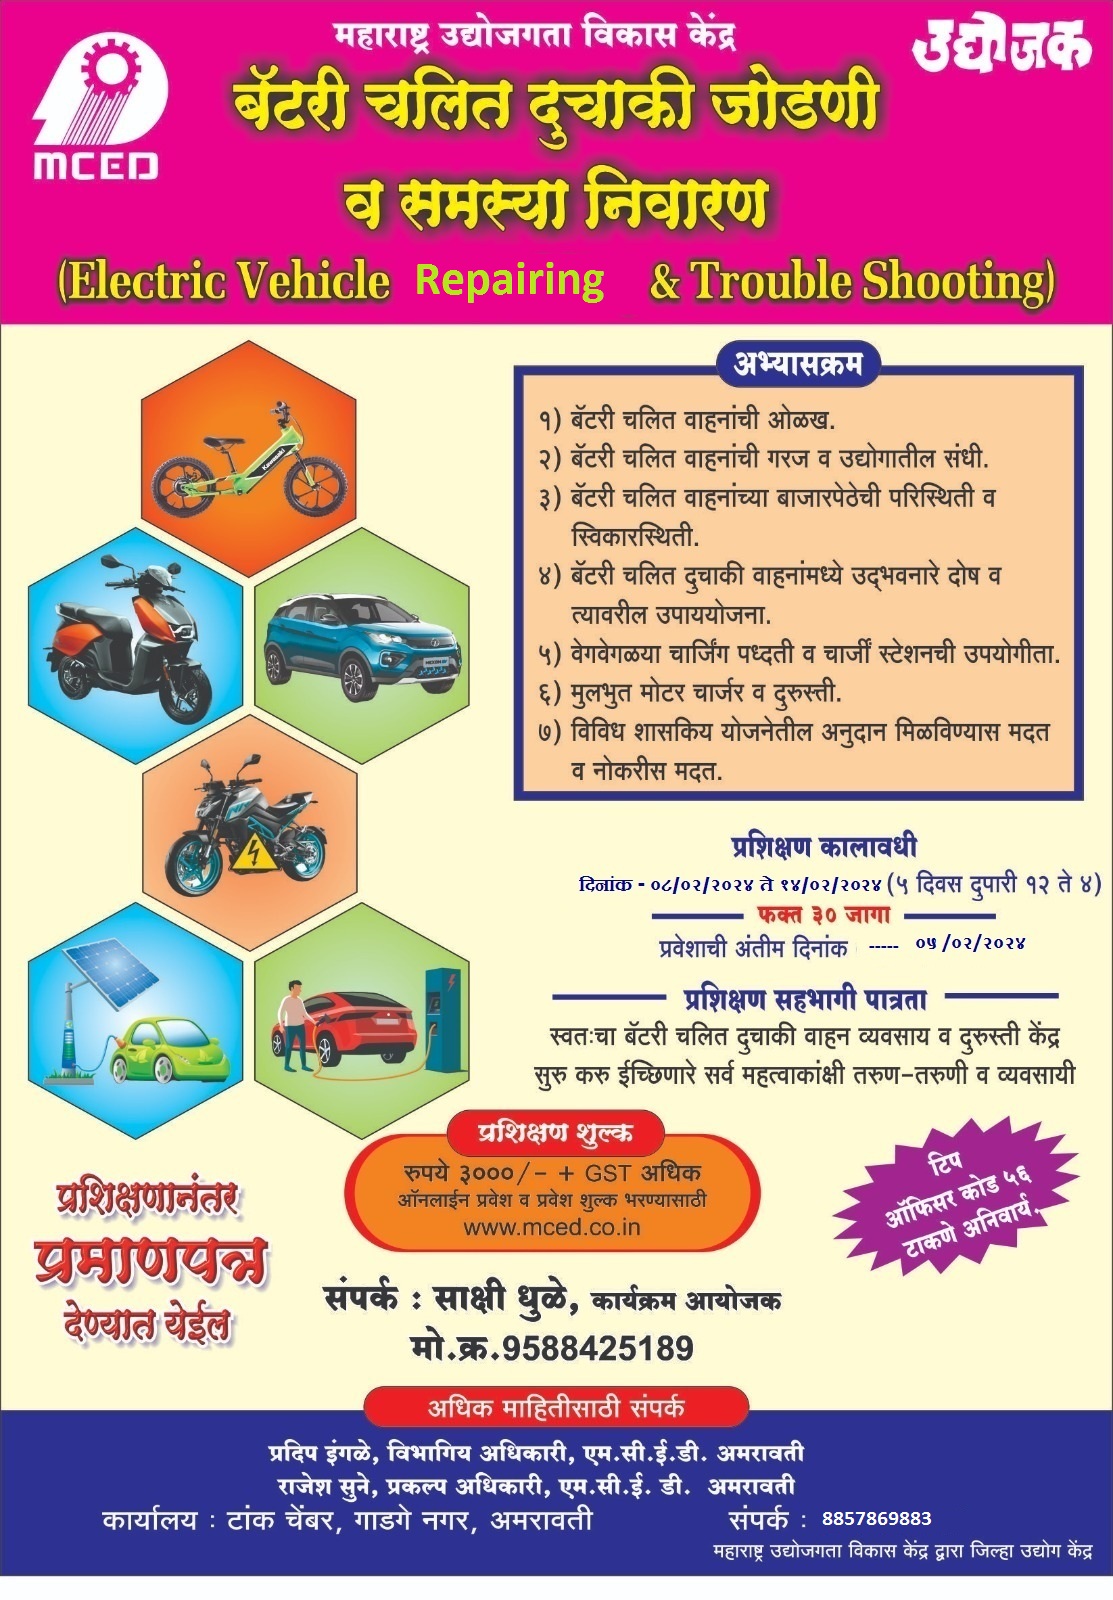 Electric Vehicle Repairing & Trouble Shooting, Amravati.